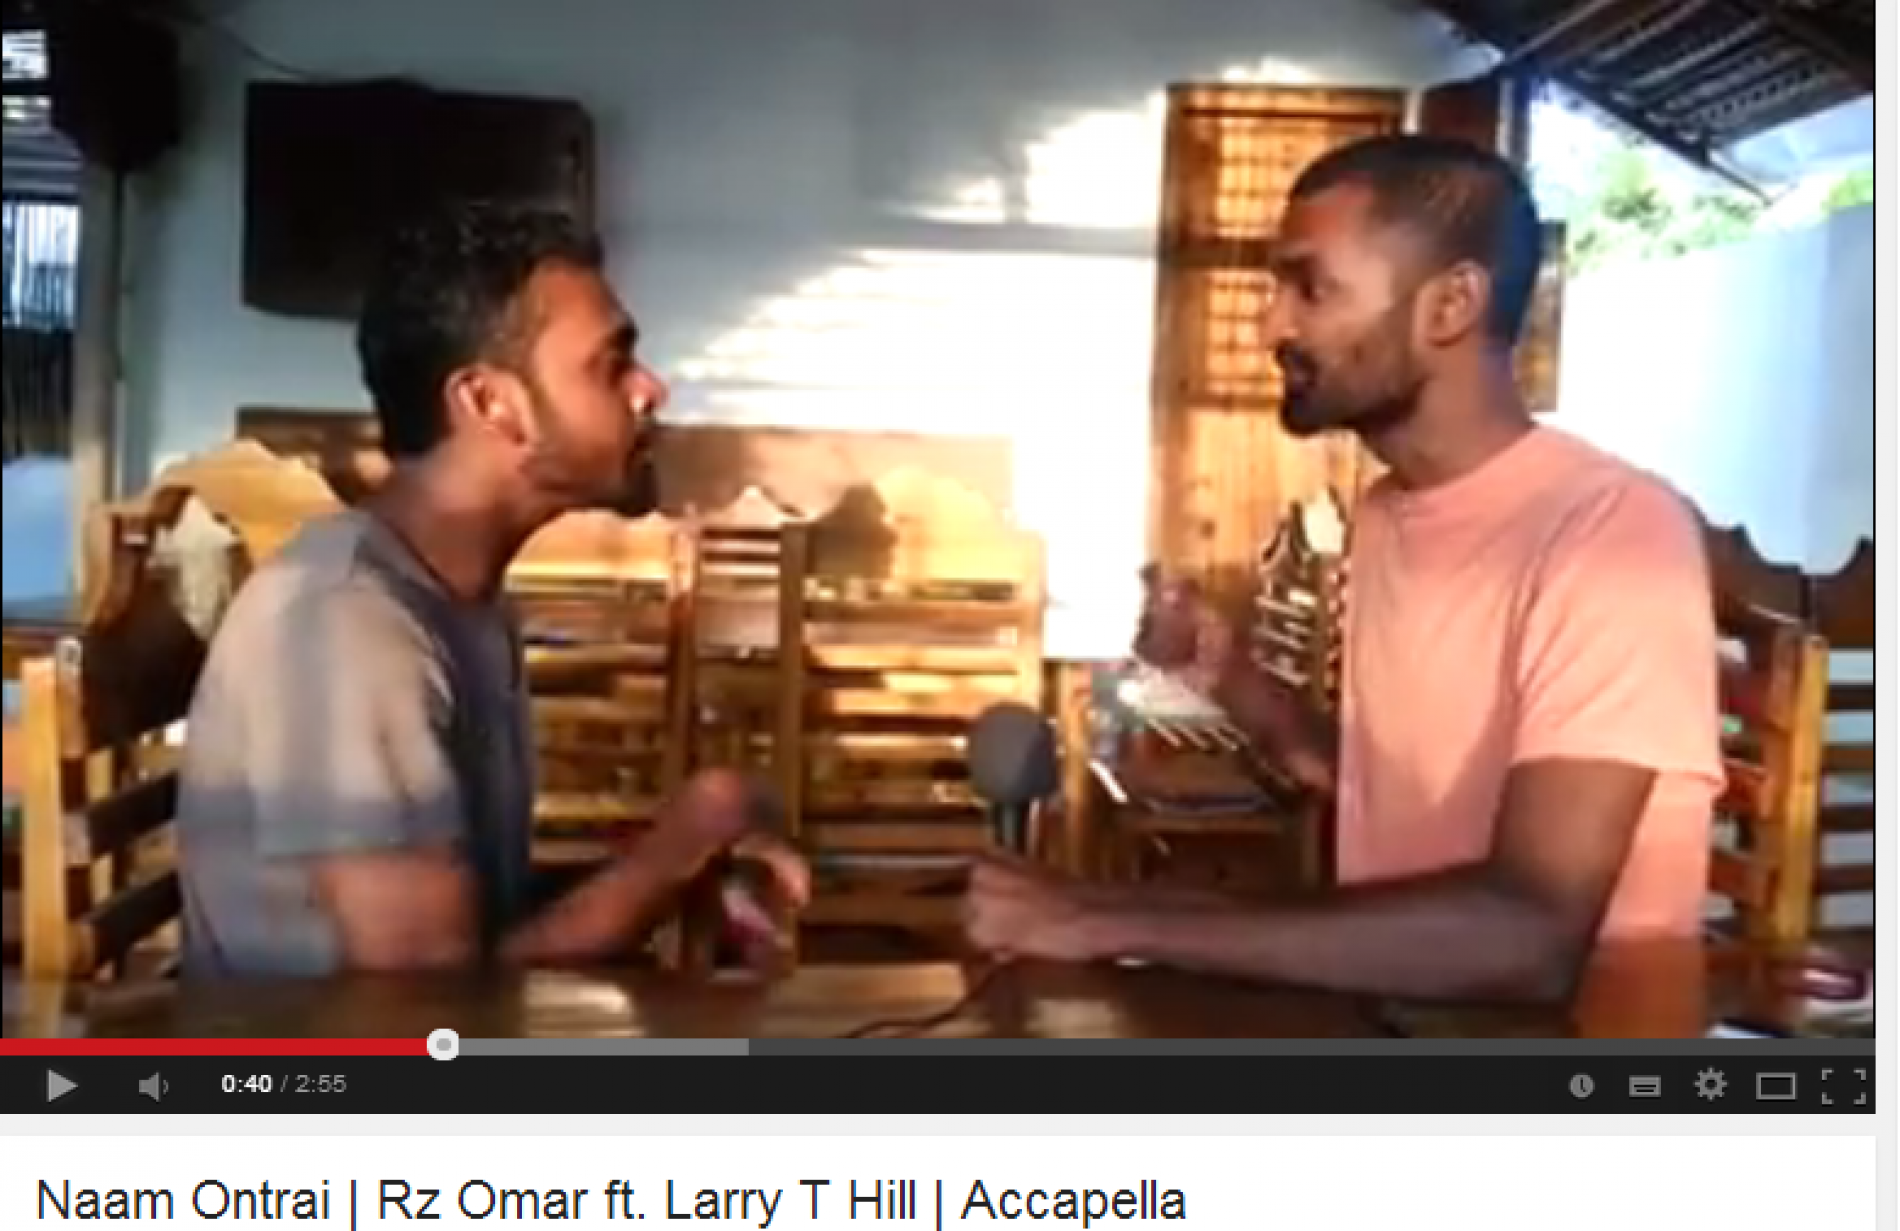 Rz Omar ft. Larry T Hill – Naam Ontrai (Accapella)